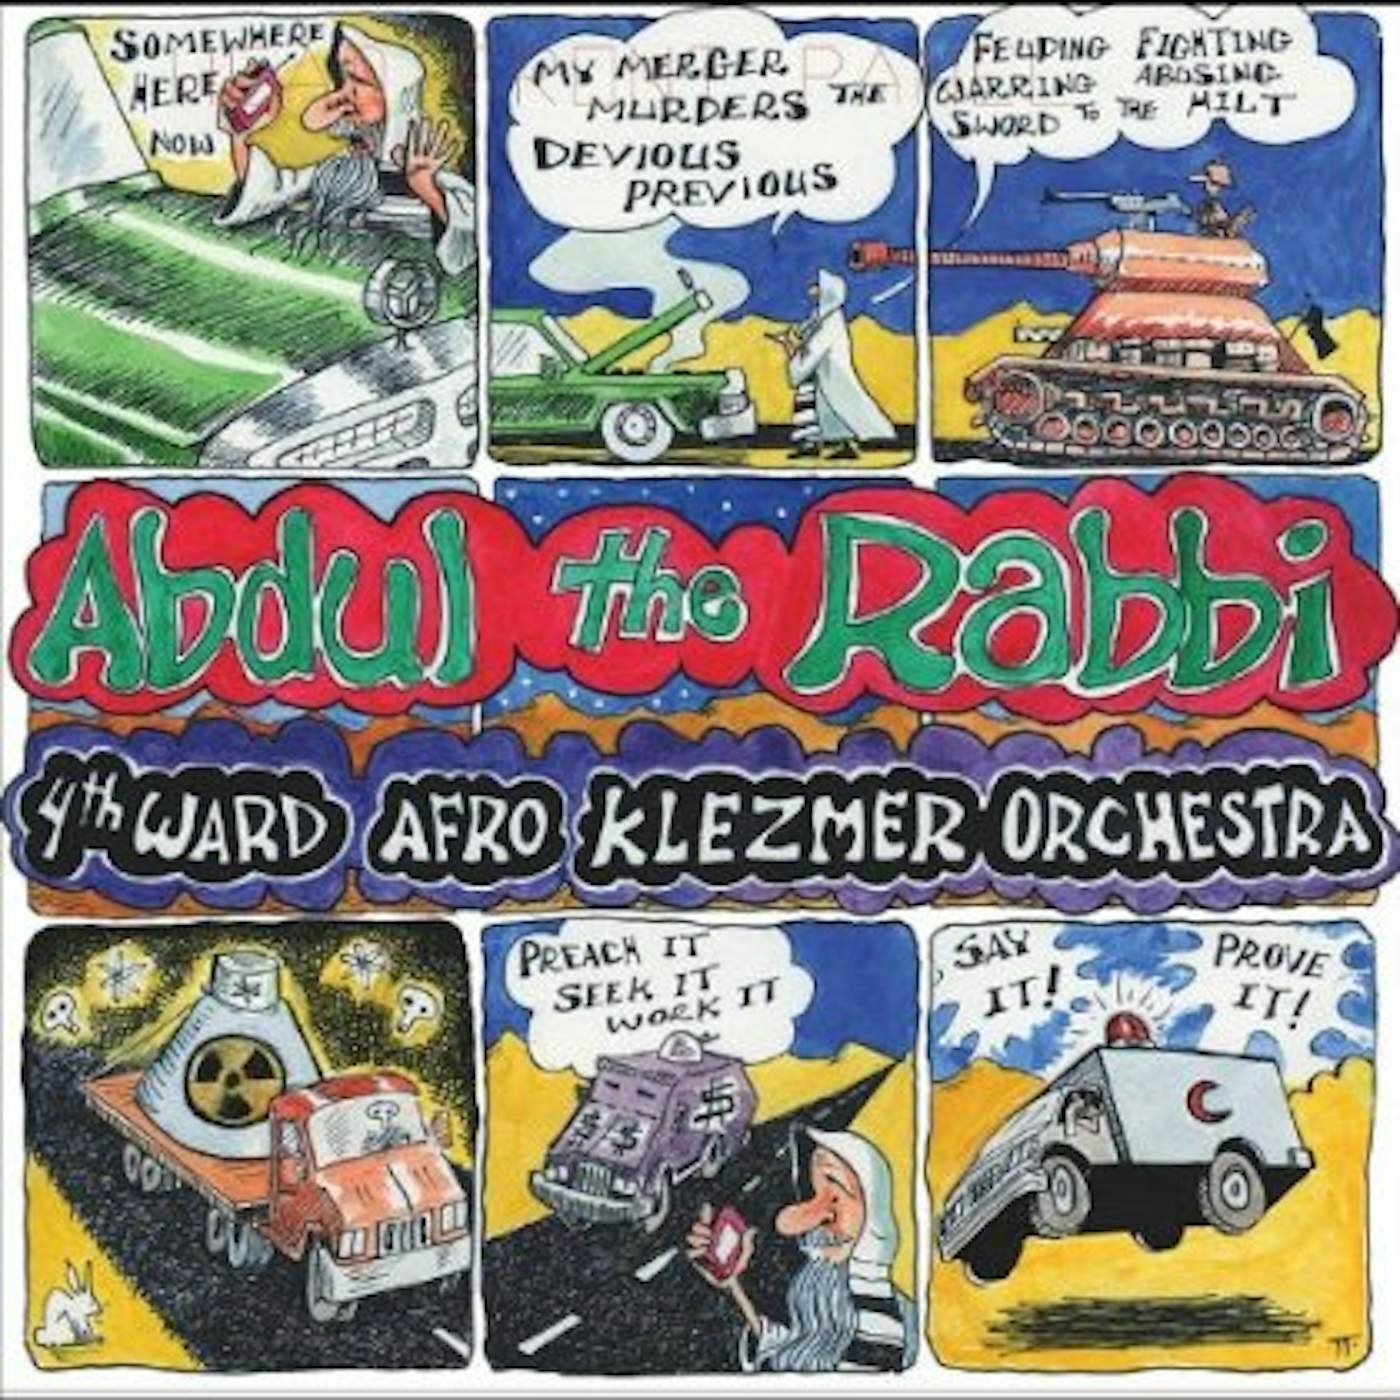 4th Ward Afro-Klezmer Orchestra ABDUL THE RABBI CD